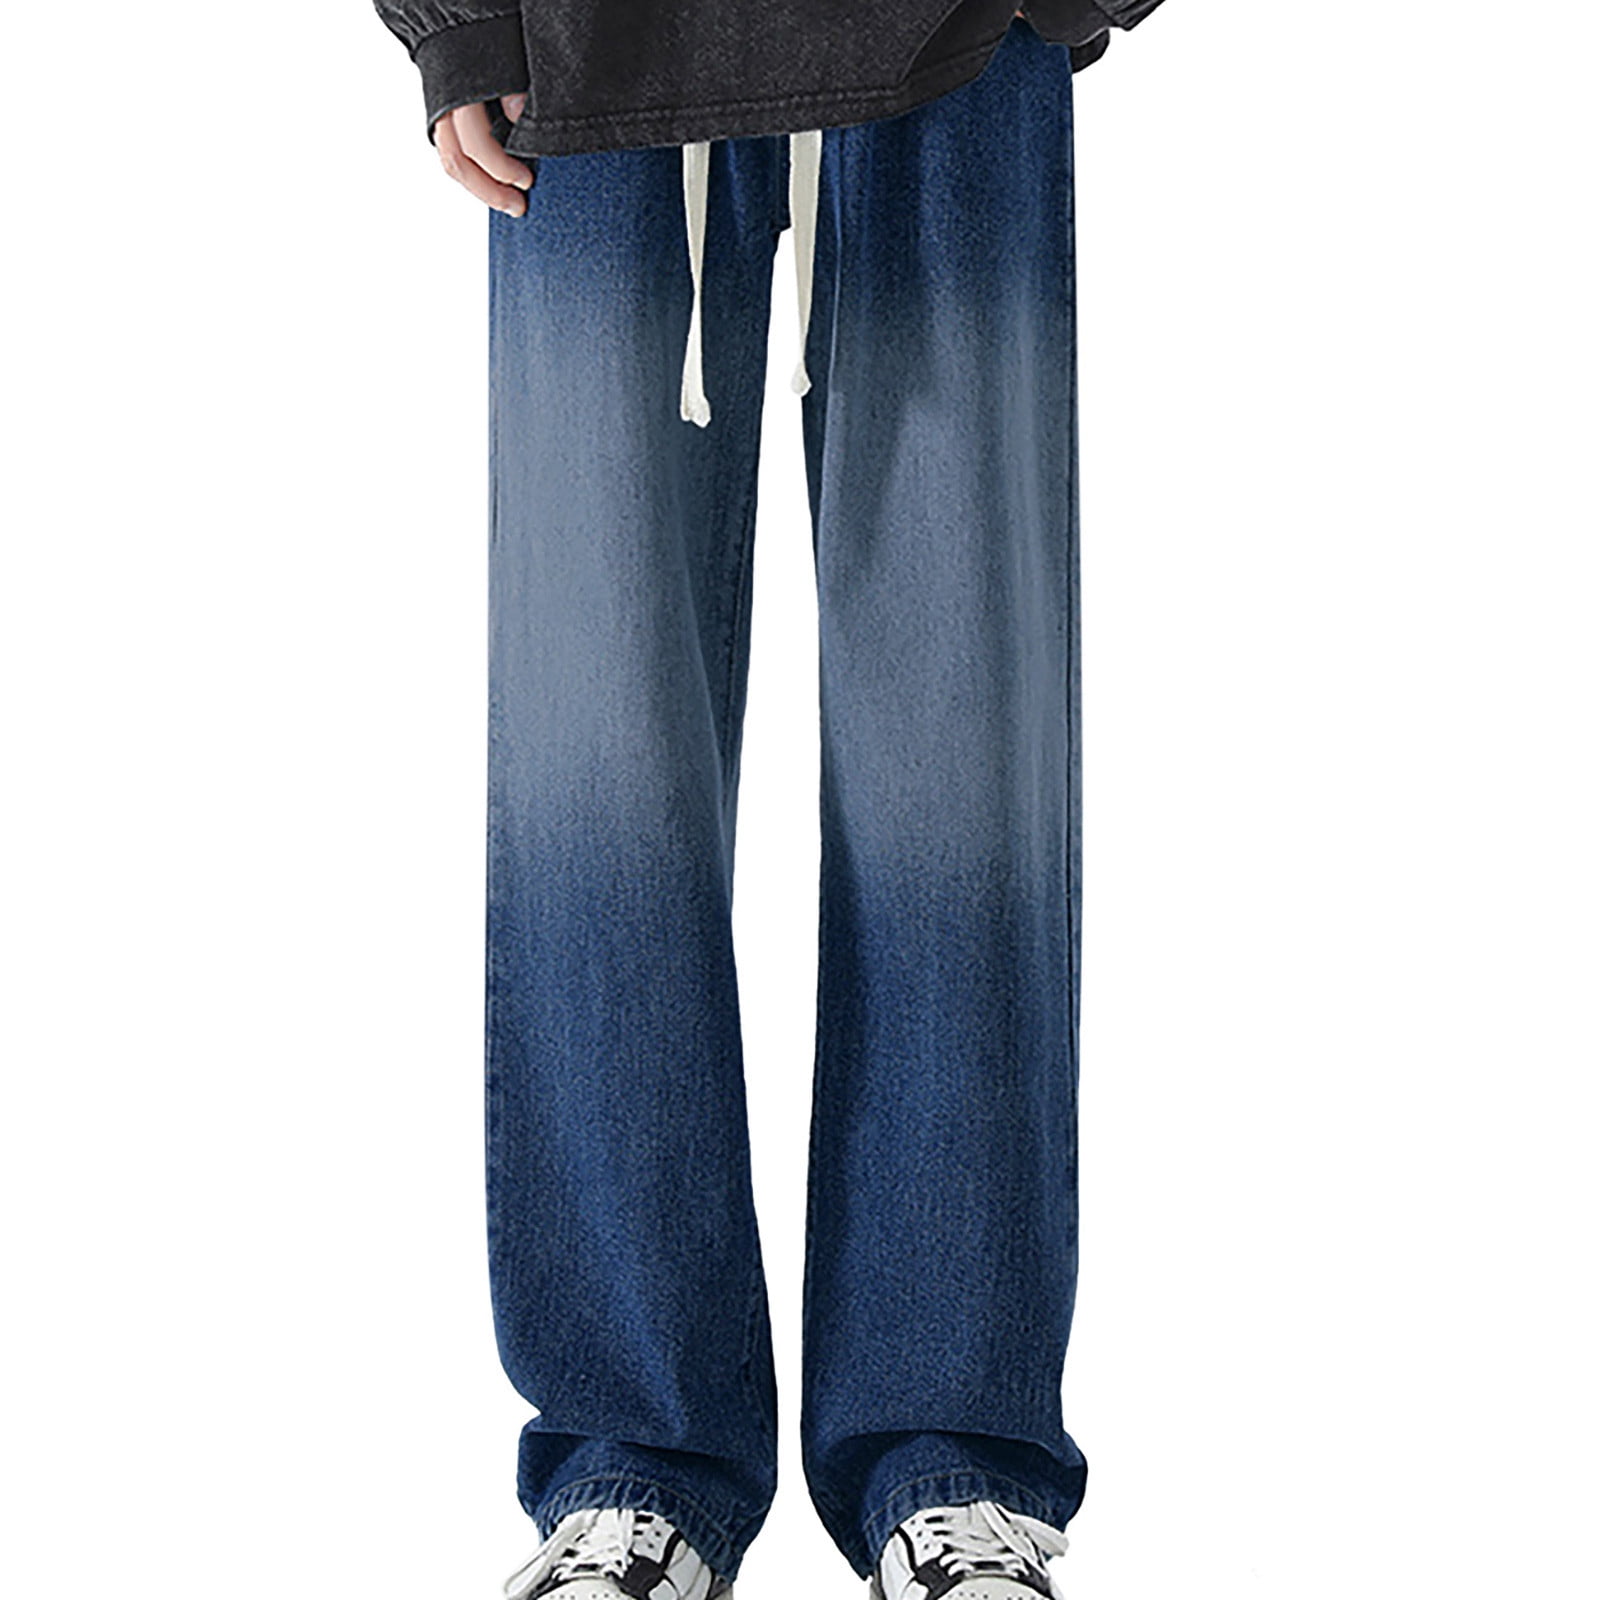 Rrunsv Mens Bootcut Jeans Men's Skinny Slim Fit Stretch Straight Leg ...